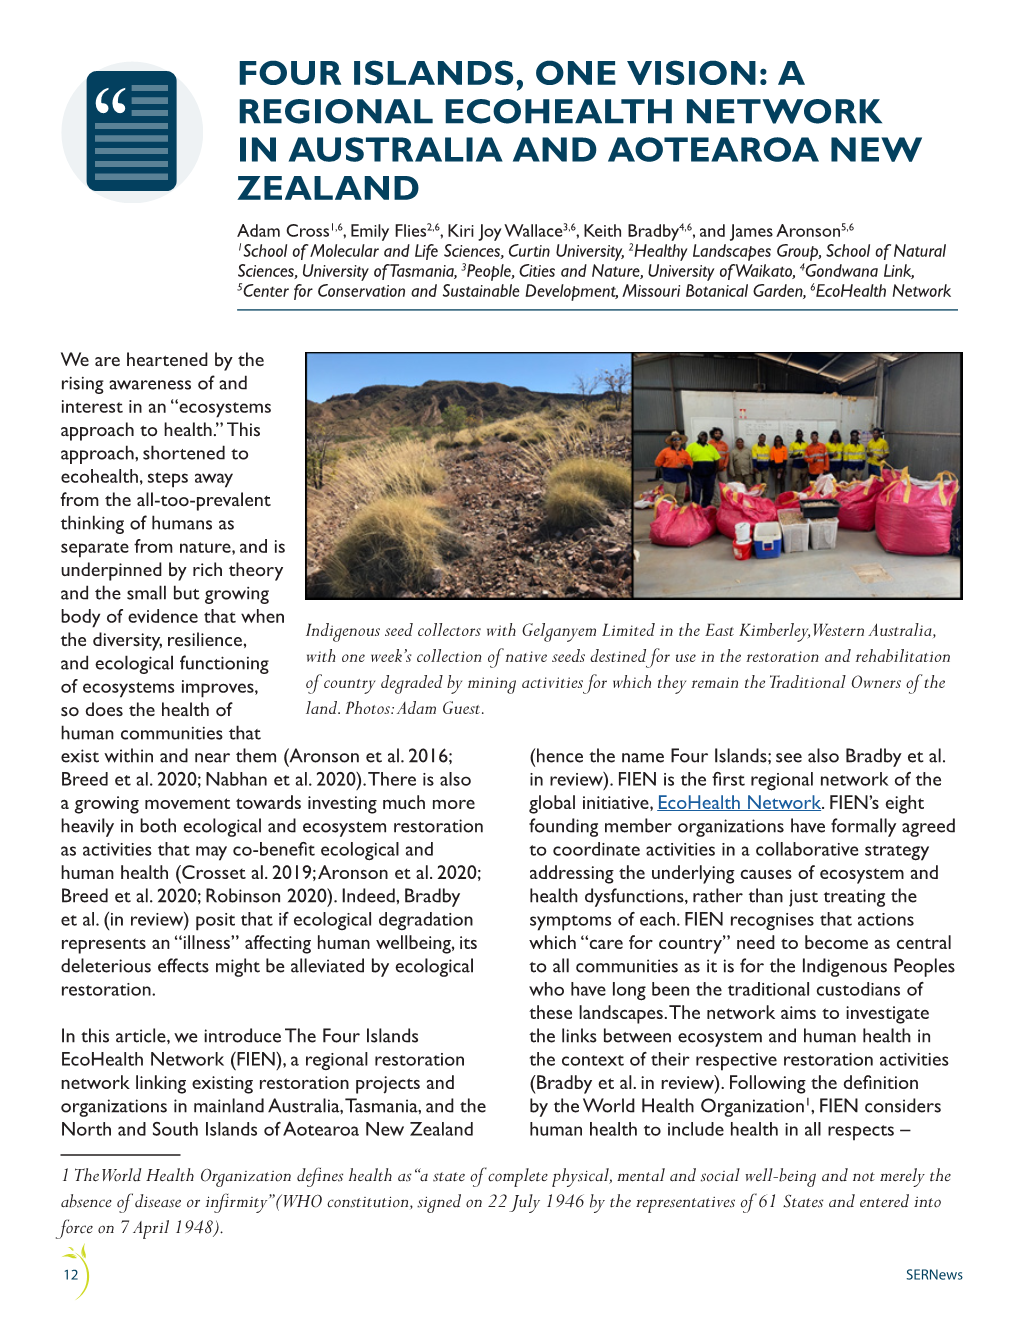 A Regional Ecohealth Network in Australia and Aotearoa New Zealand